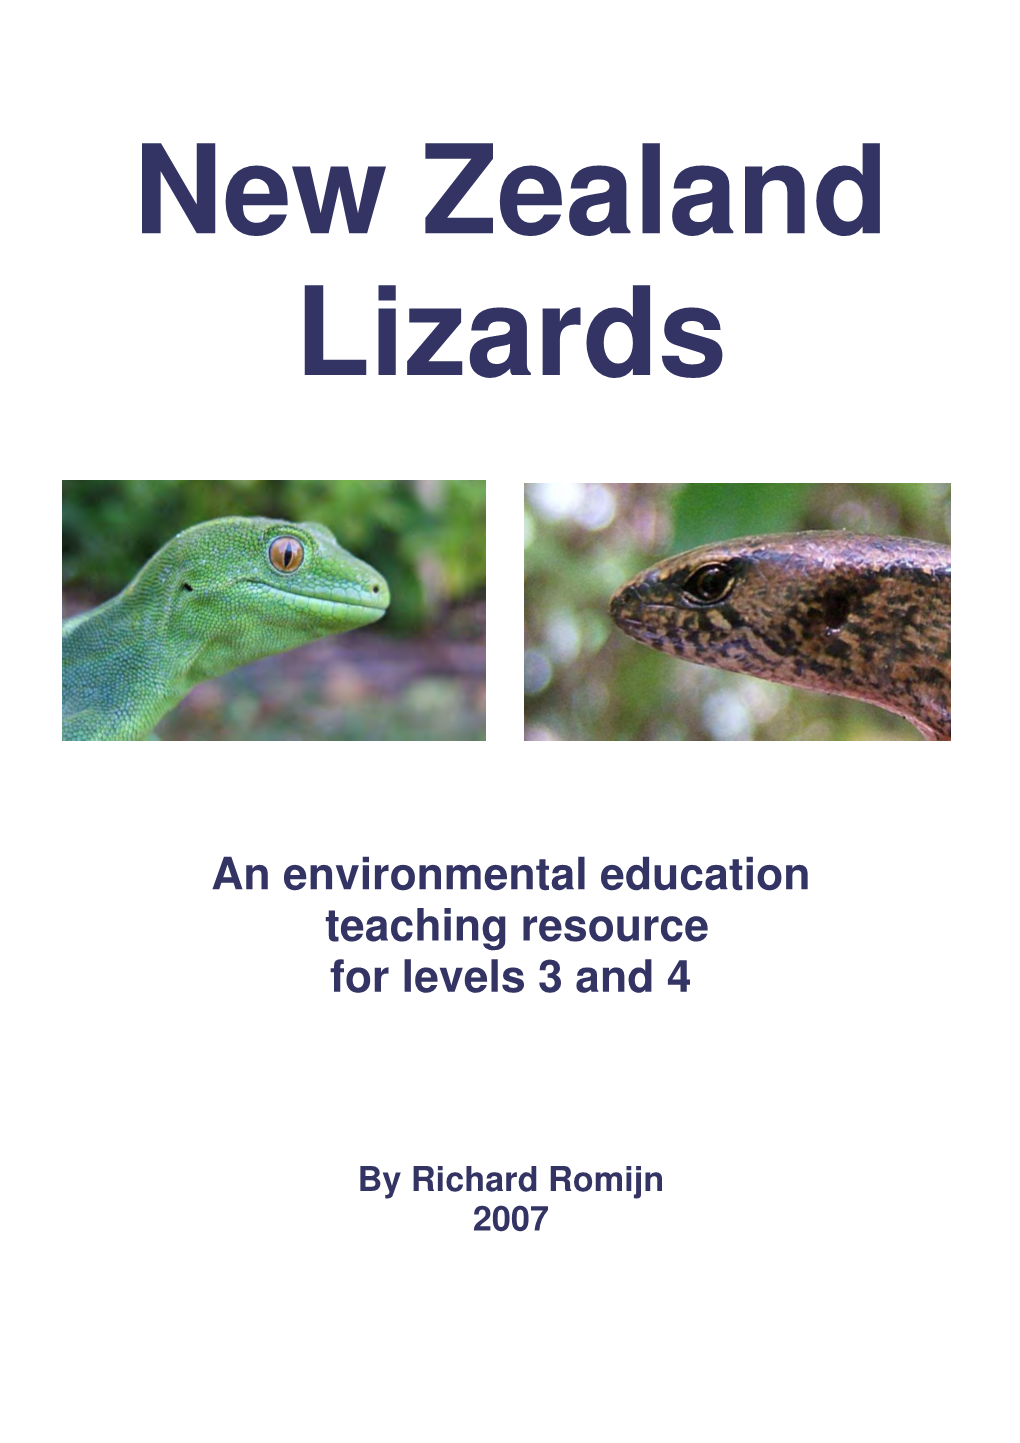 NZ Lizards-Romijn2007